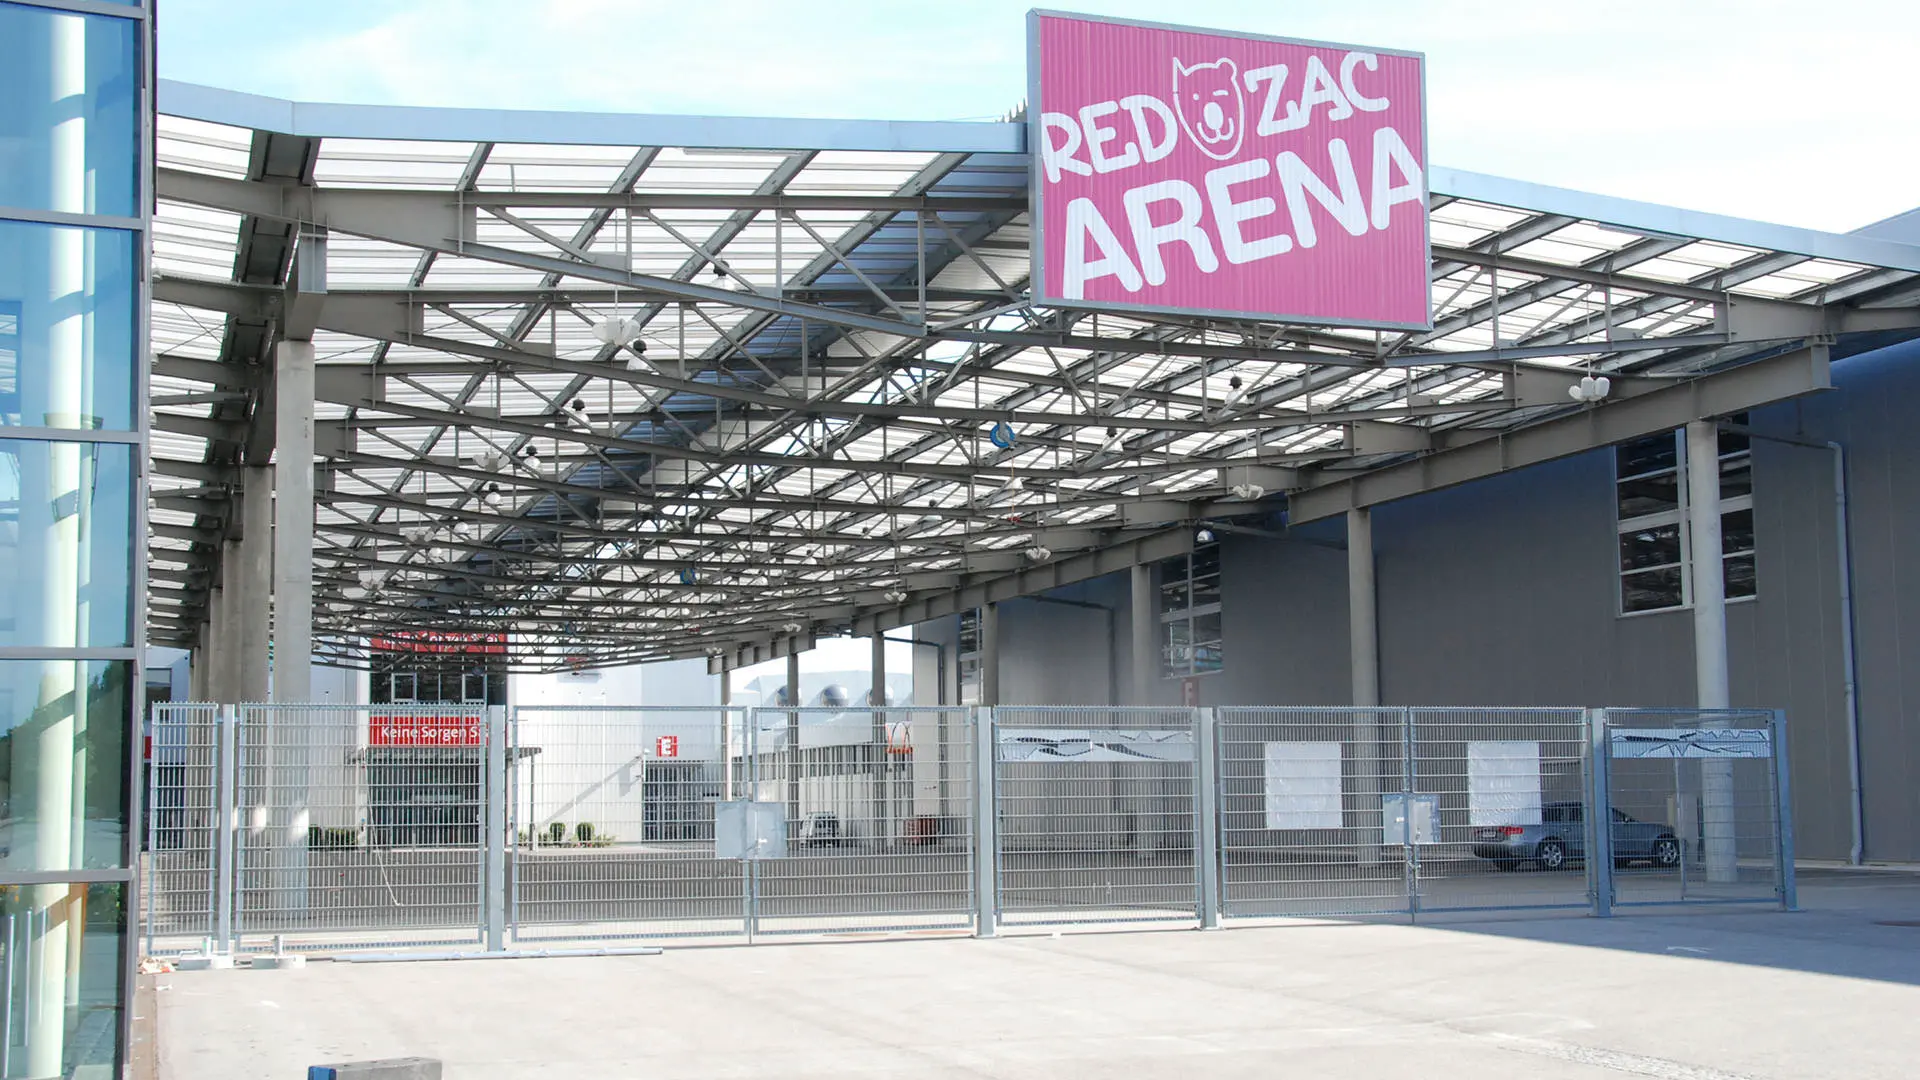 Fachmessezentrum Ried: Red Zac Arena